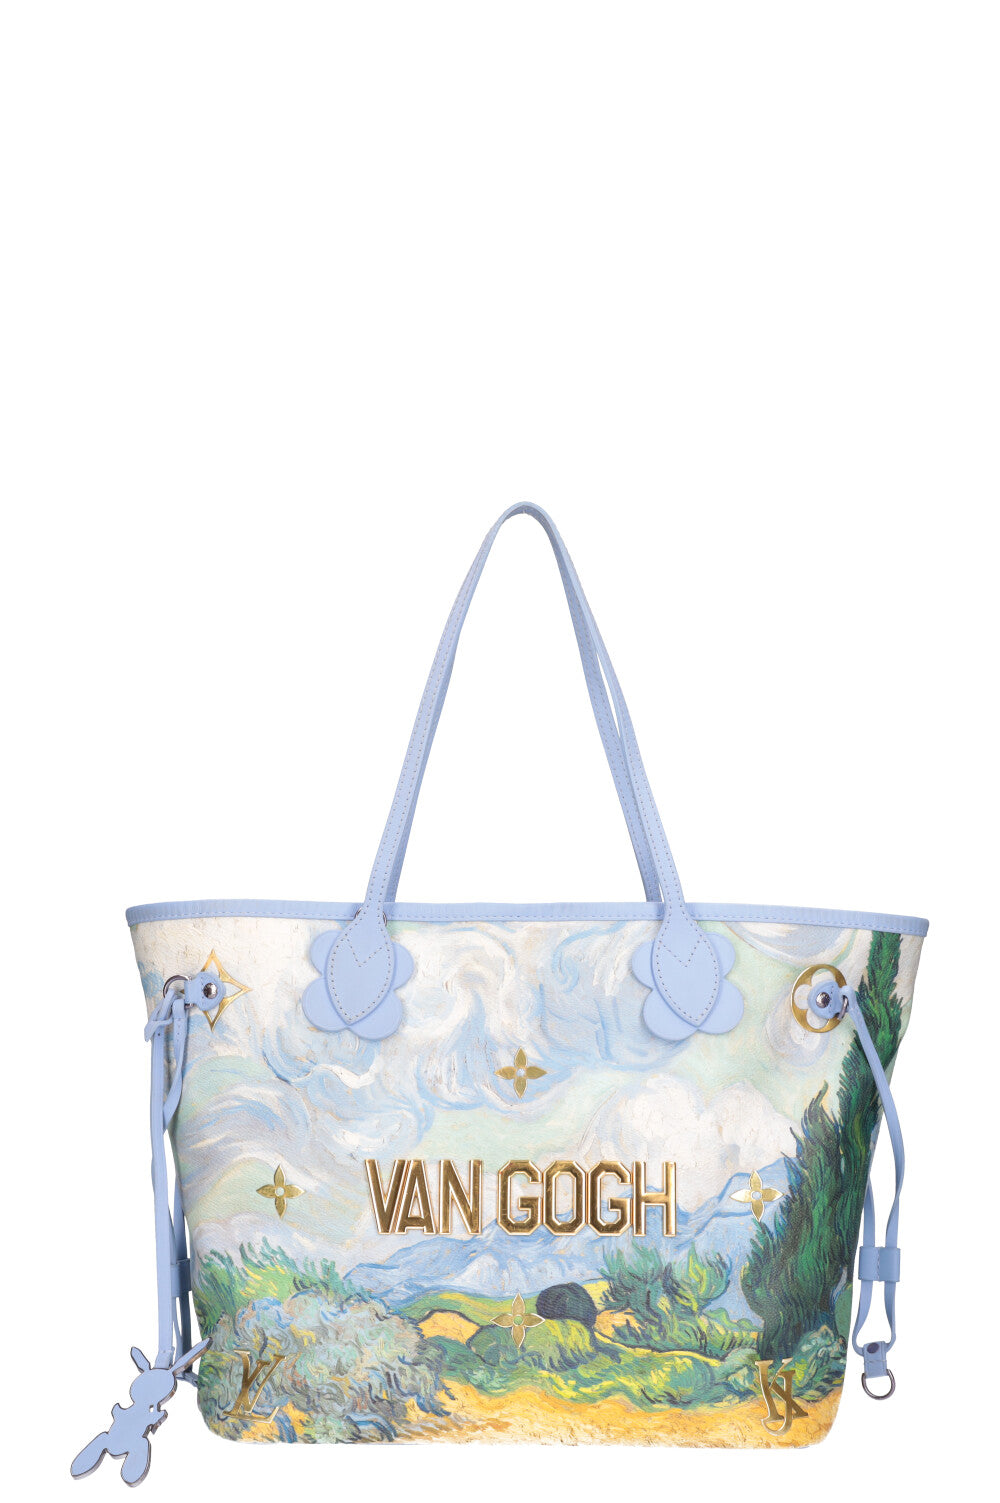 Sac Vuitton Neverfull Jeff Koons Van Gogh - Vinted